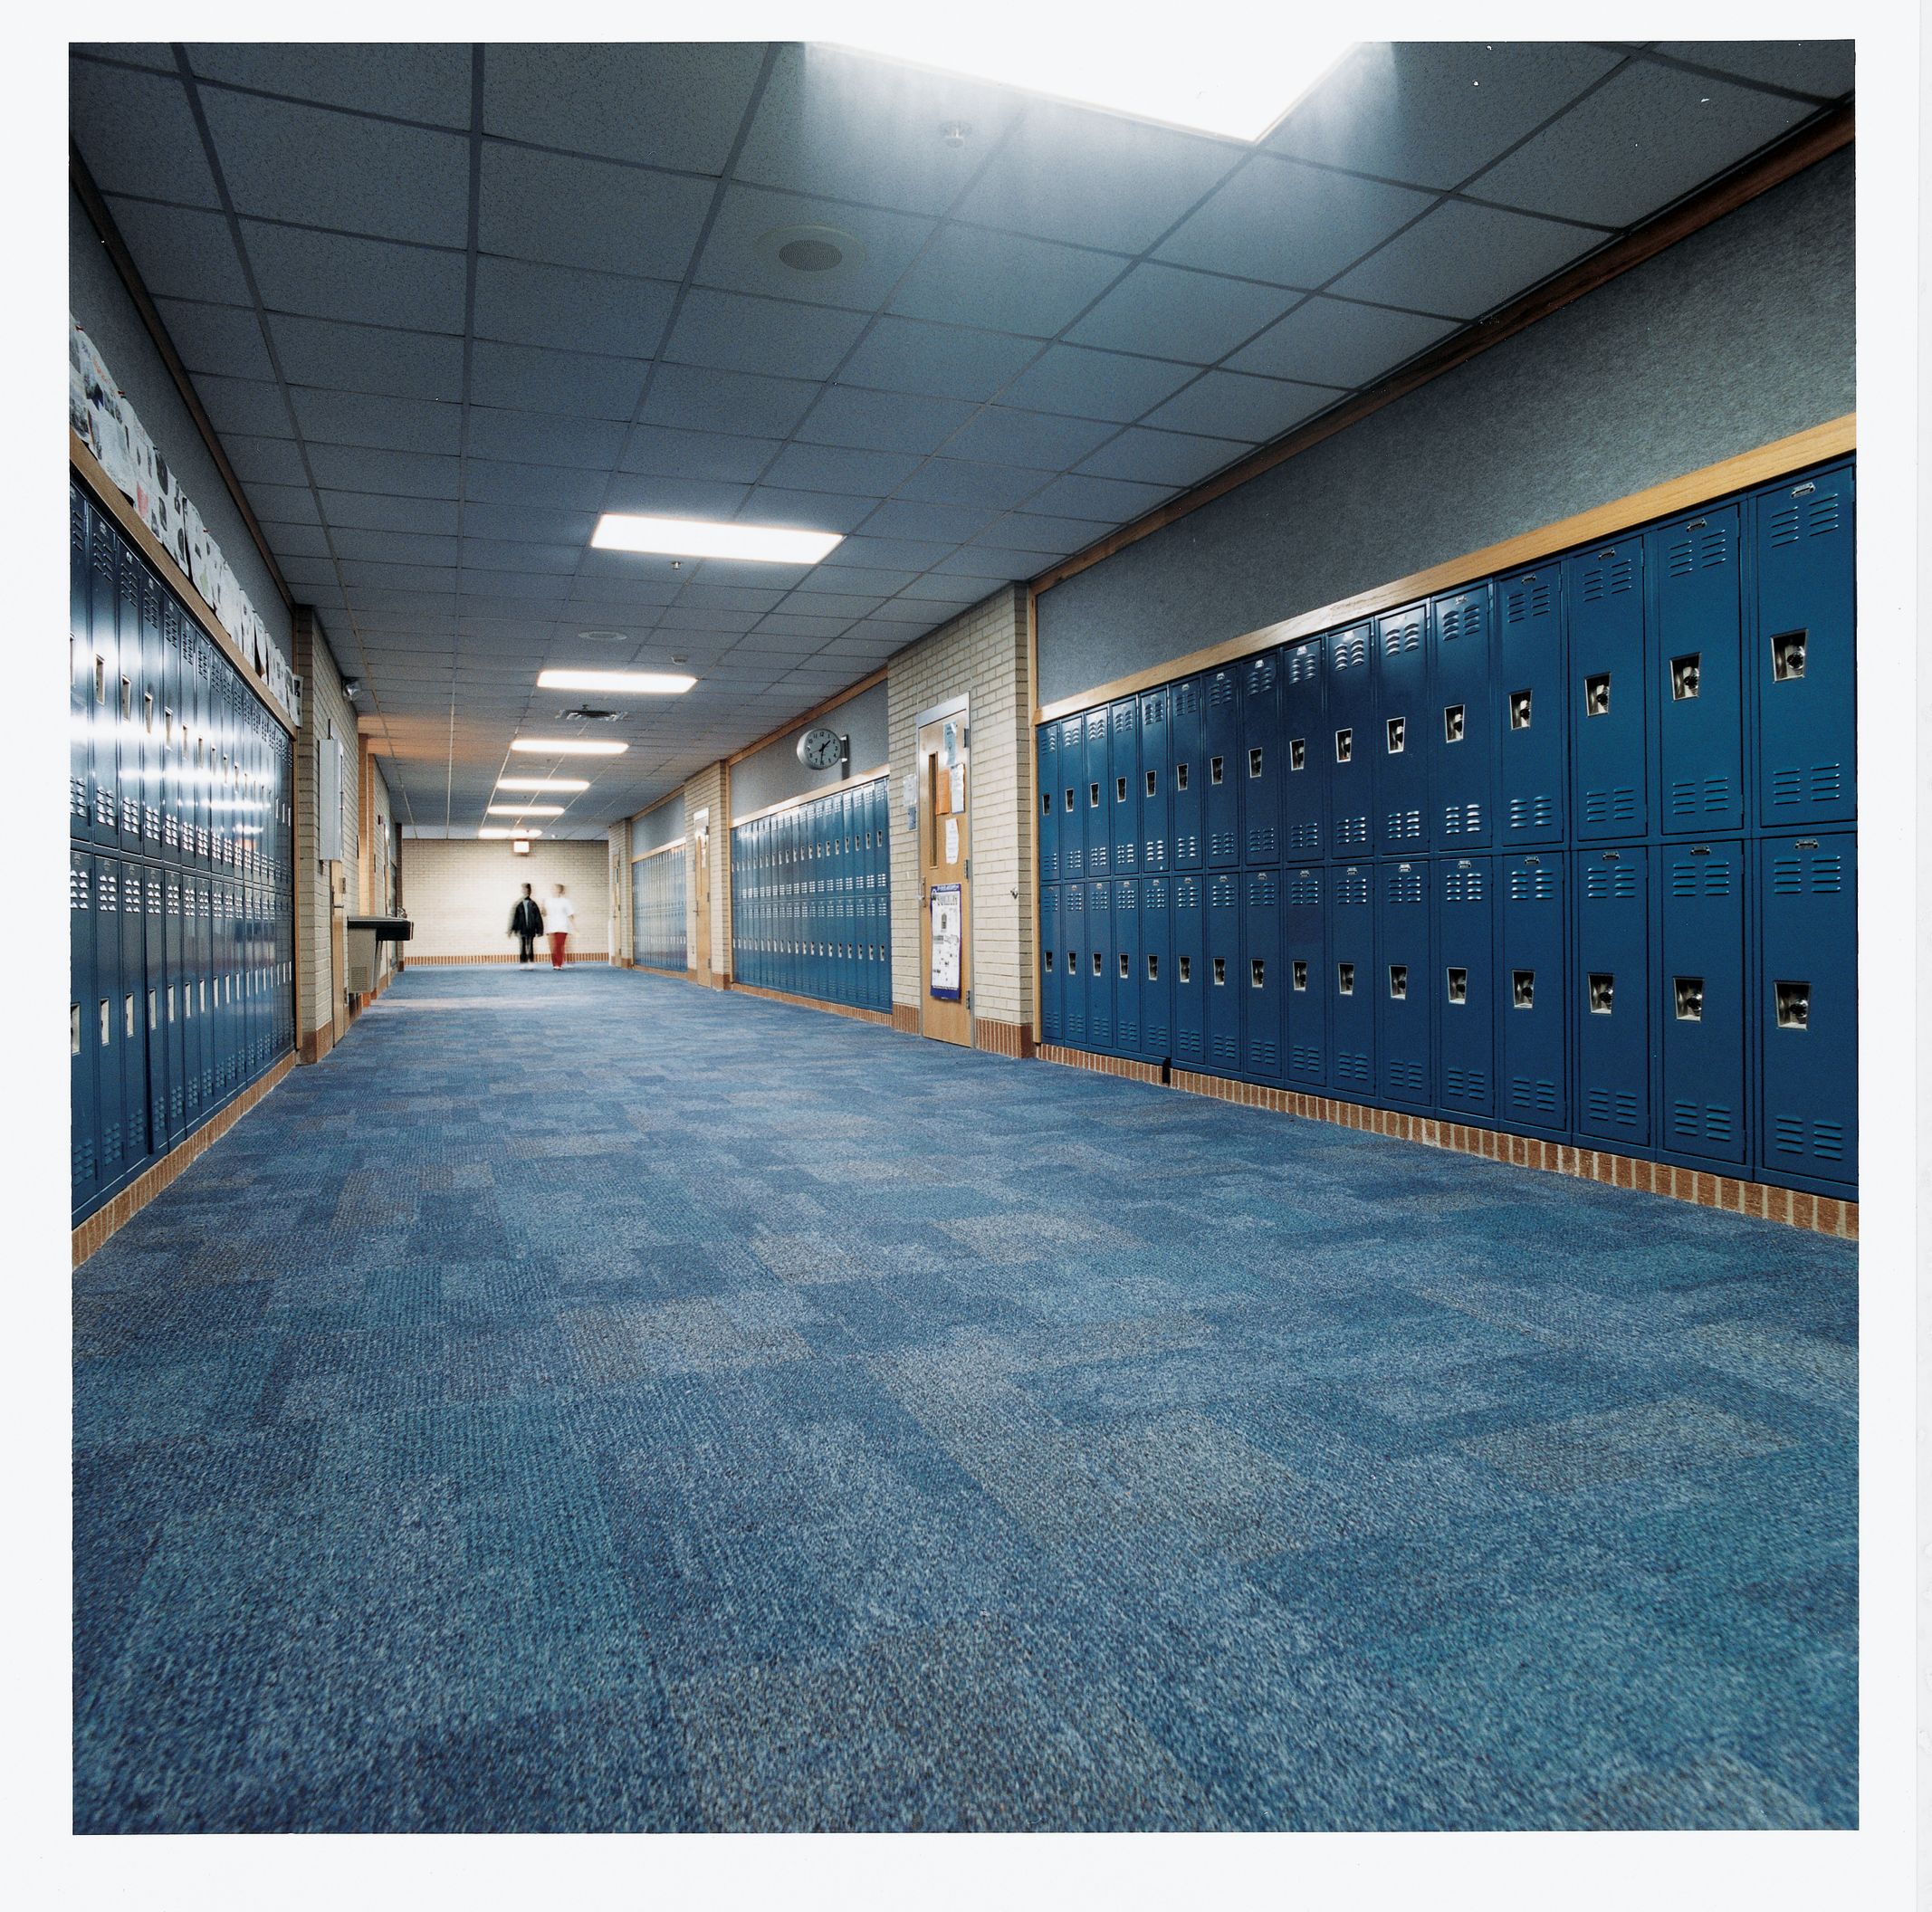 Interface Cubic carpet tile in school hallway with lockers lining walls imagen número 7